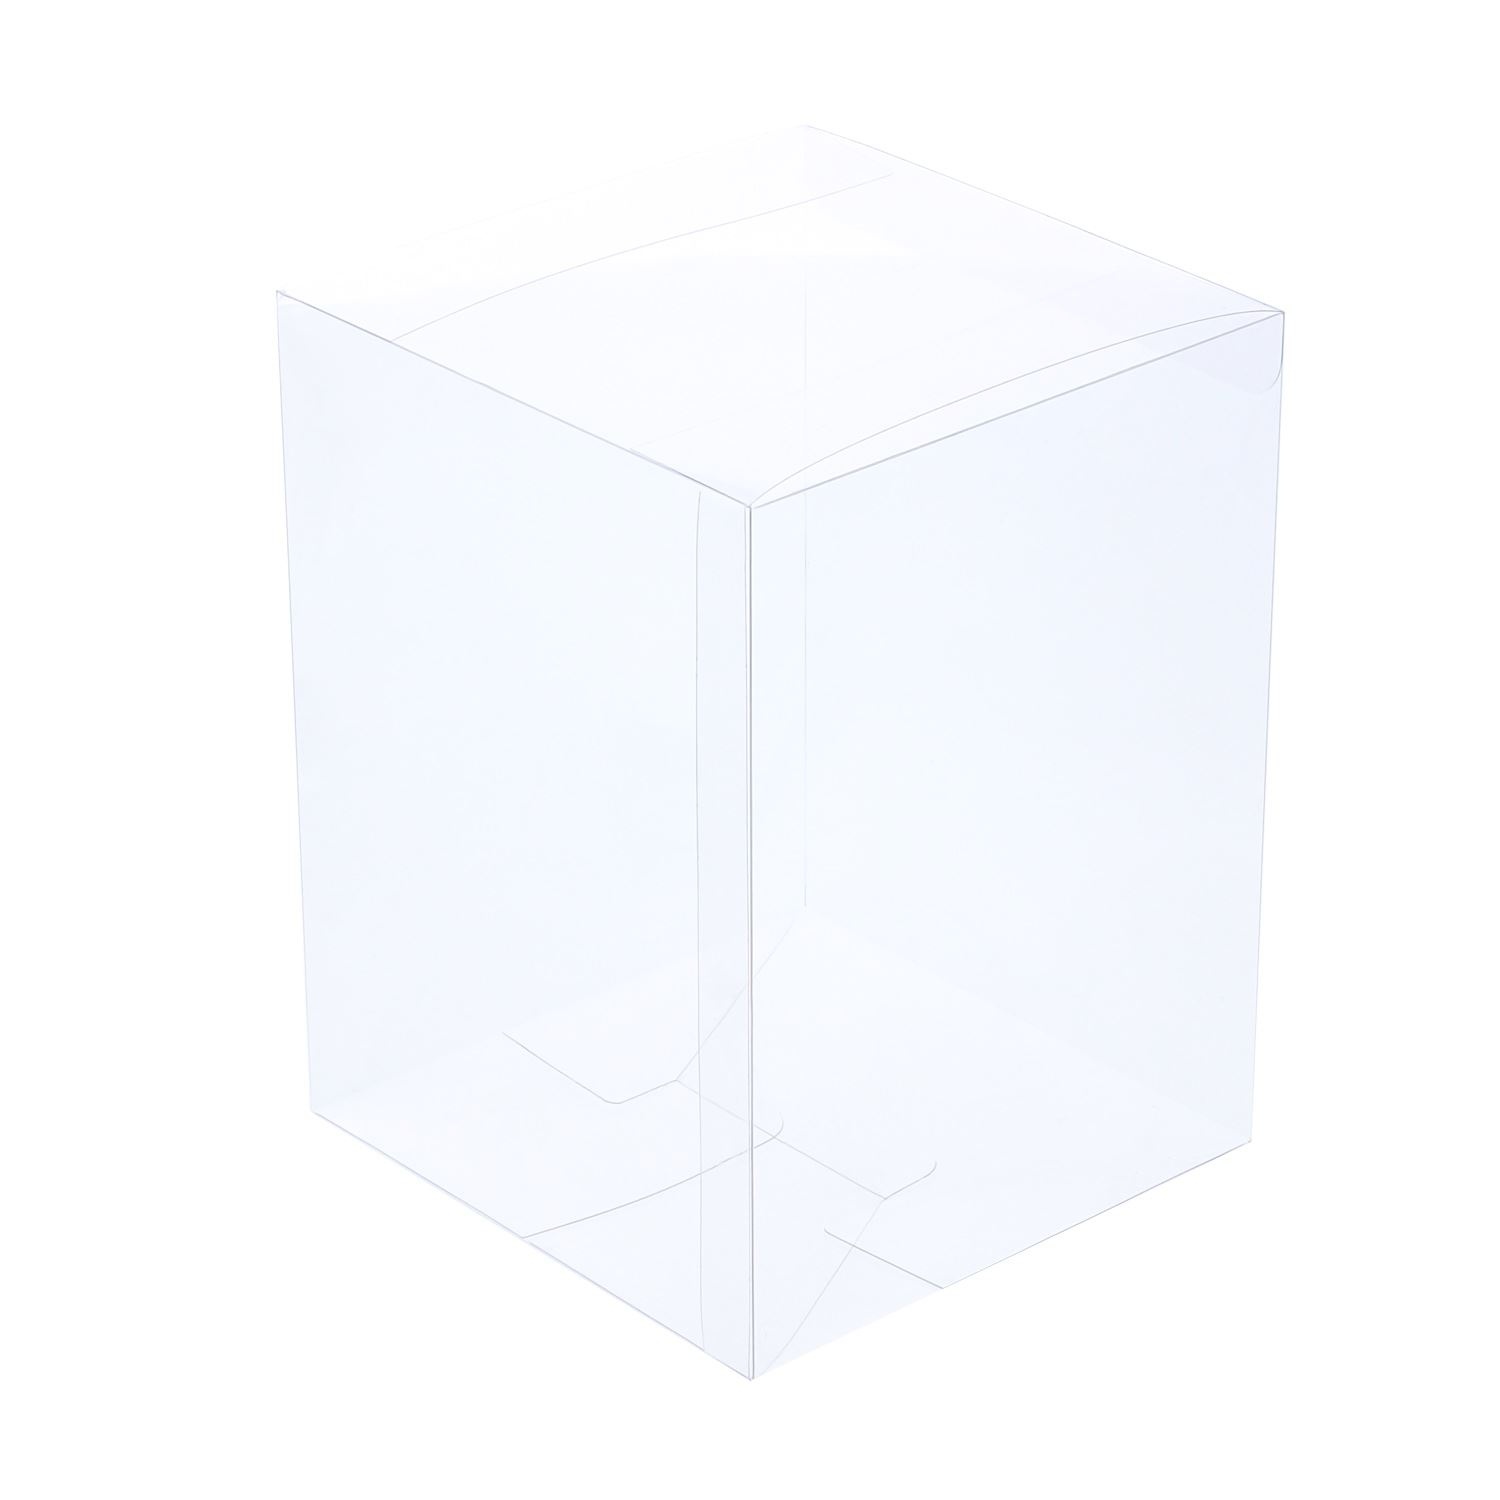 Transparente Box 150*150*200 mm - 100 Stück